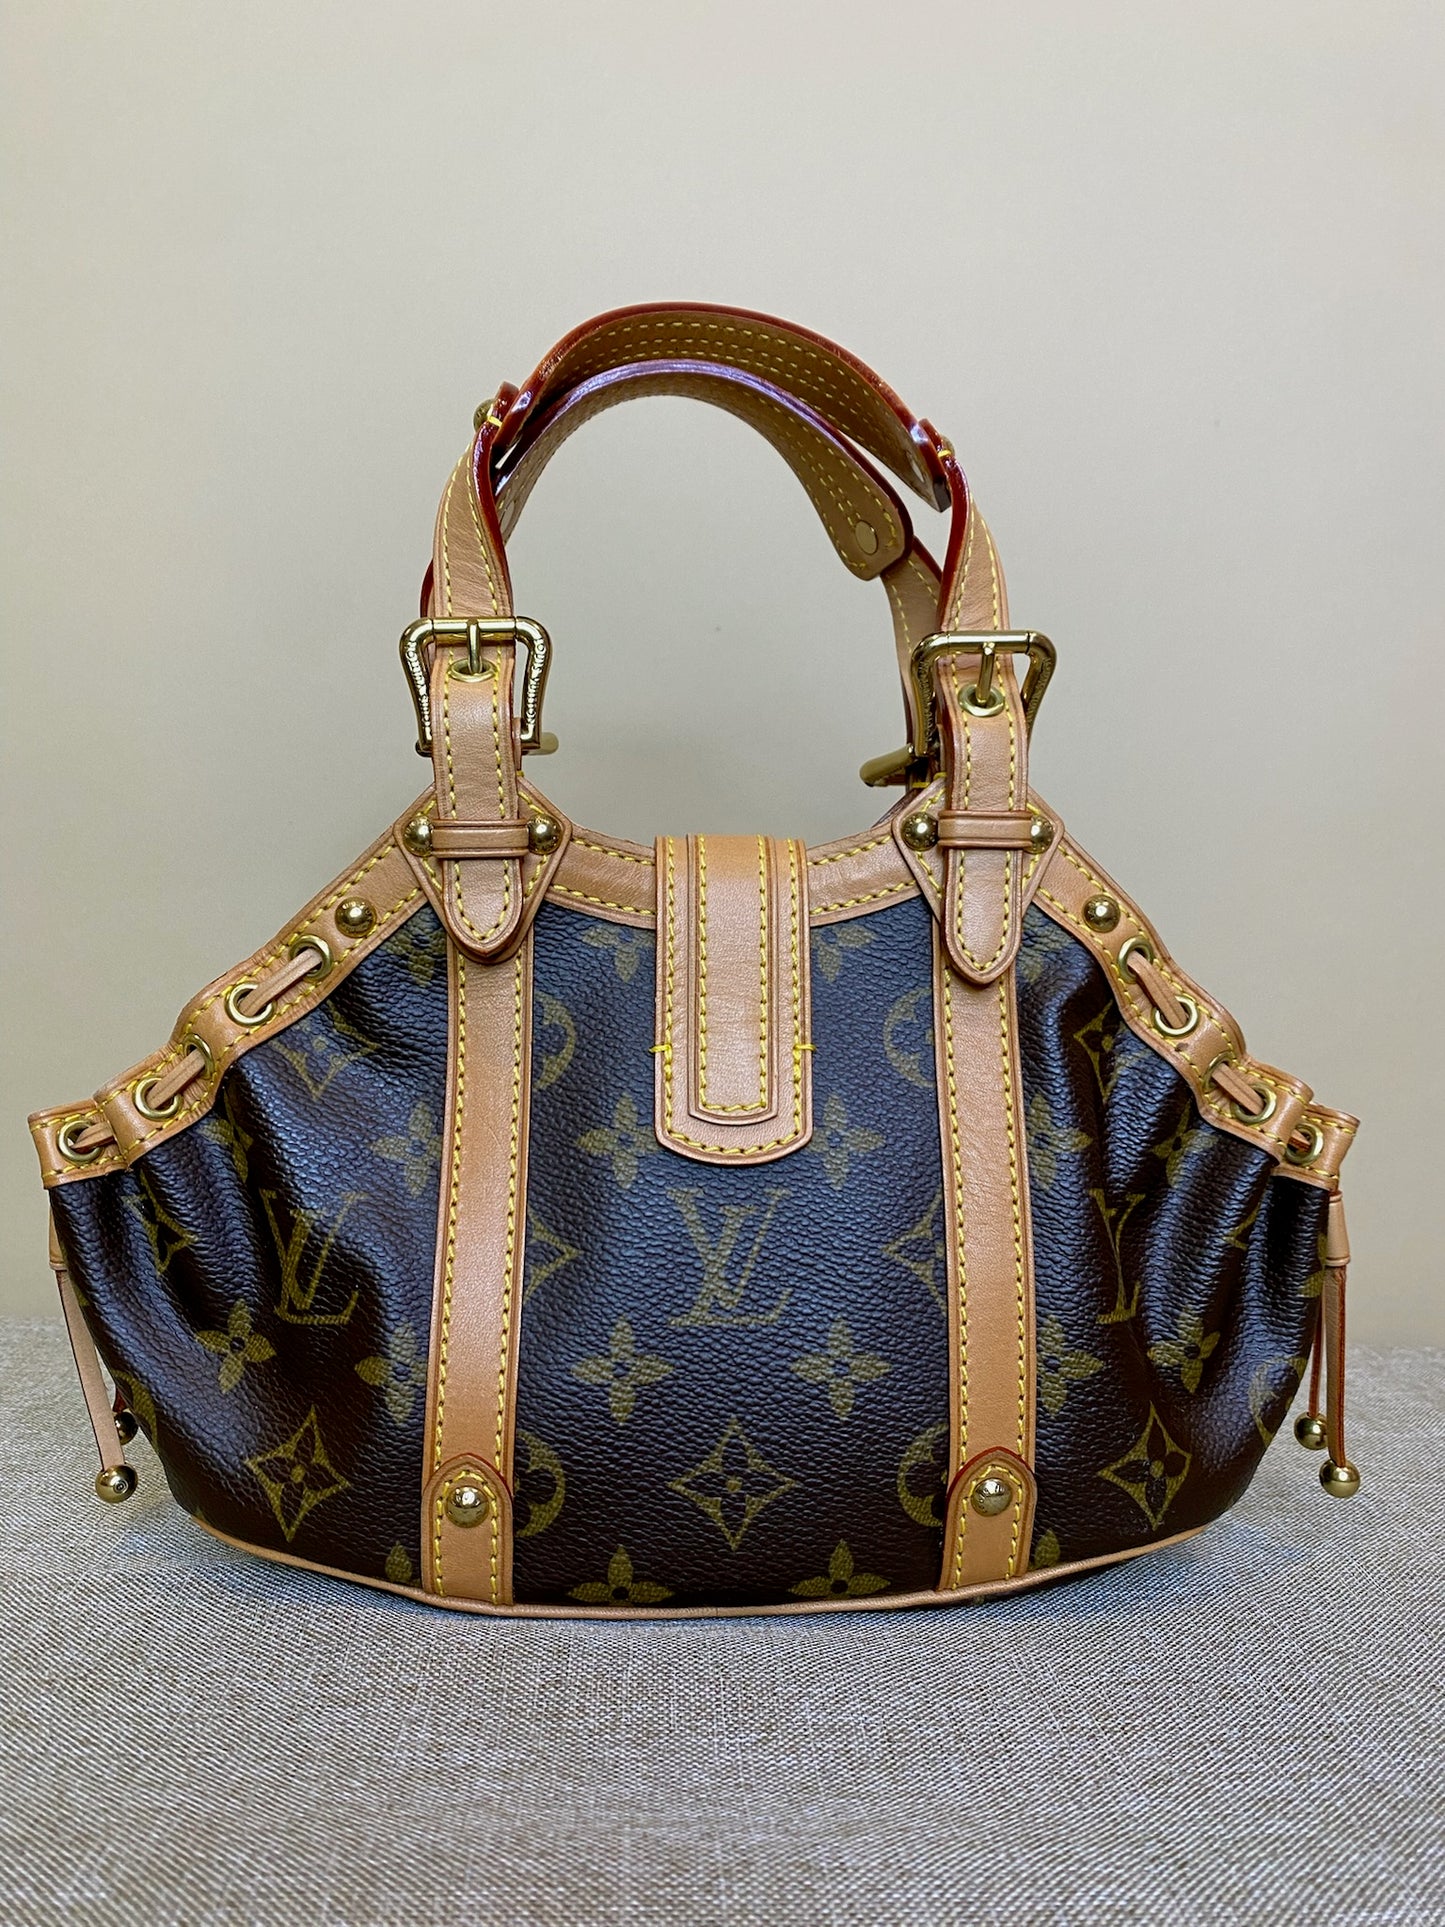 Authentic Louis Vuitton monogram theda pm buckle hand bag purse